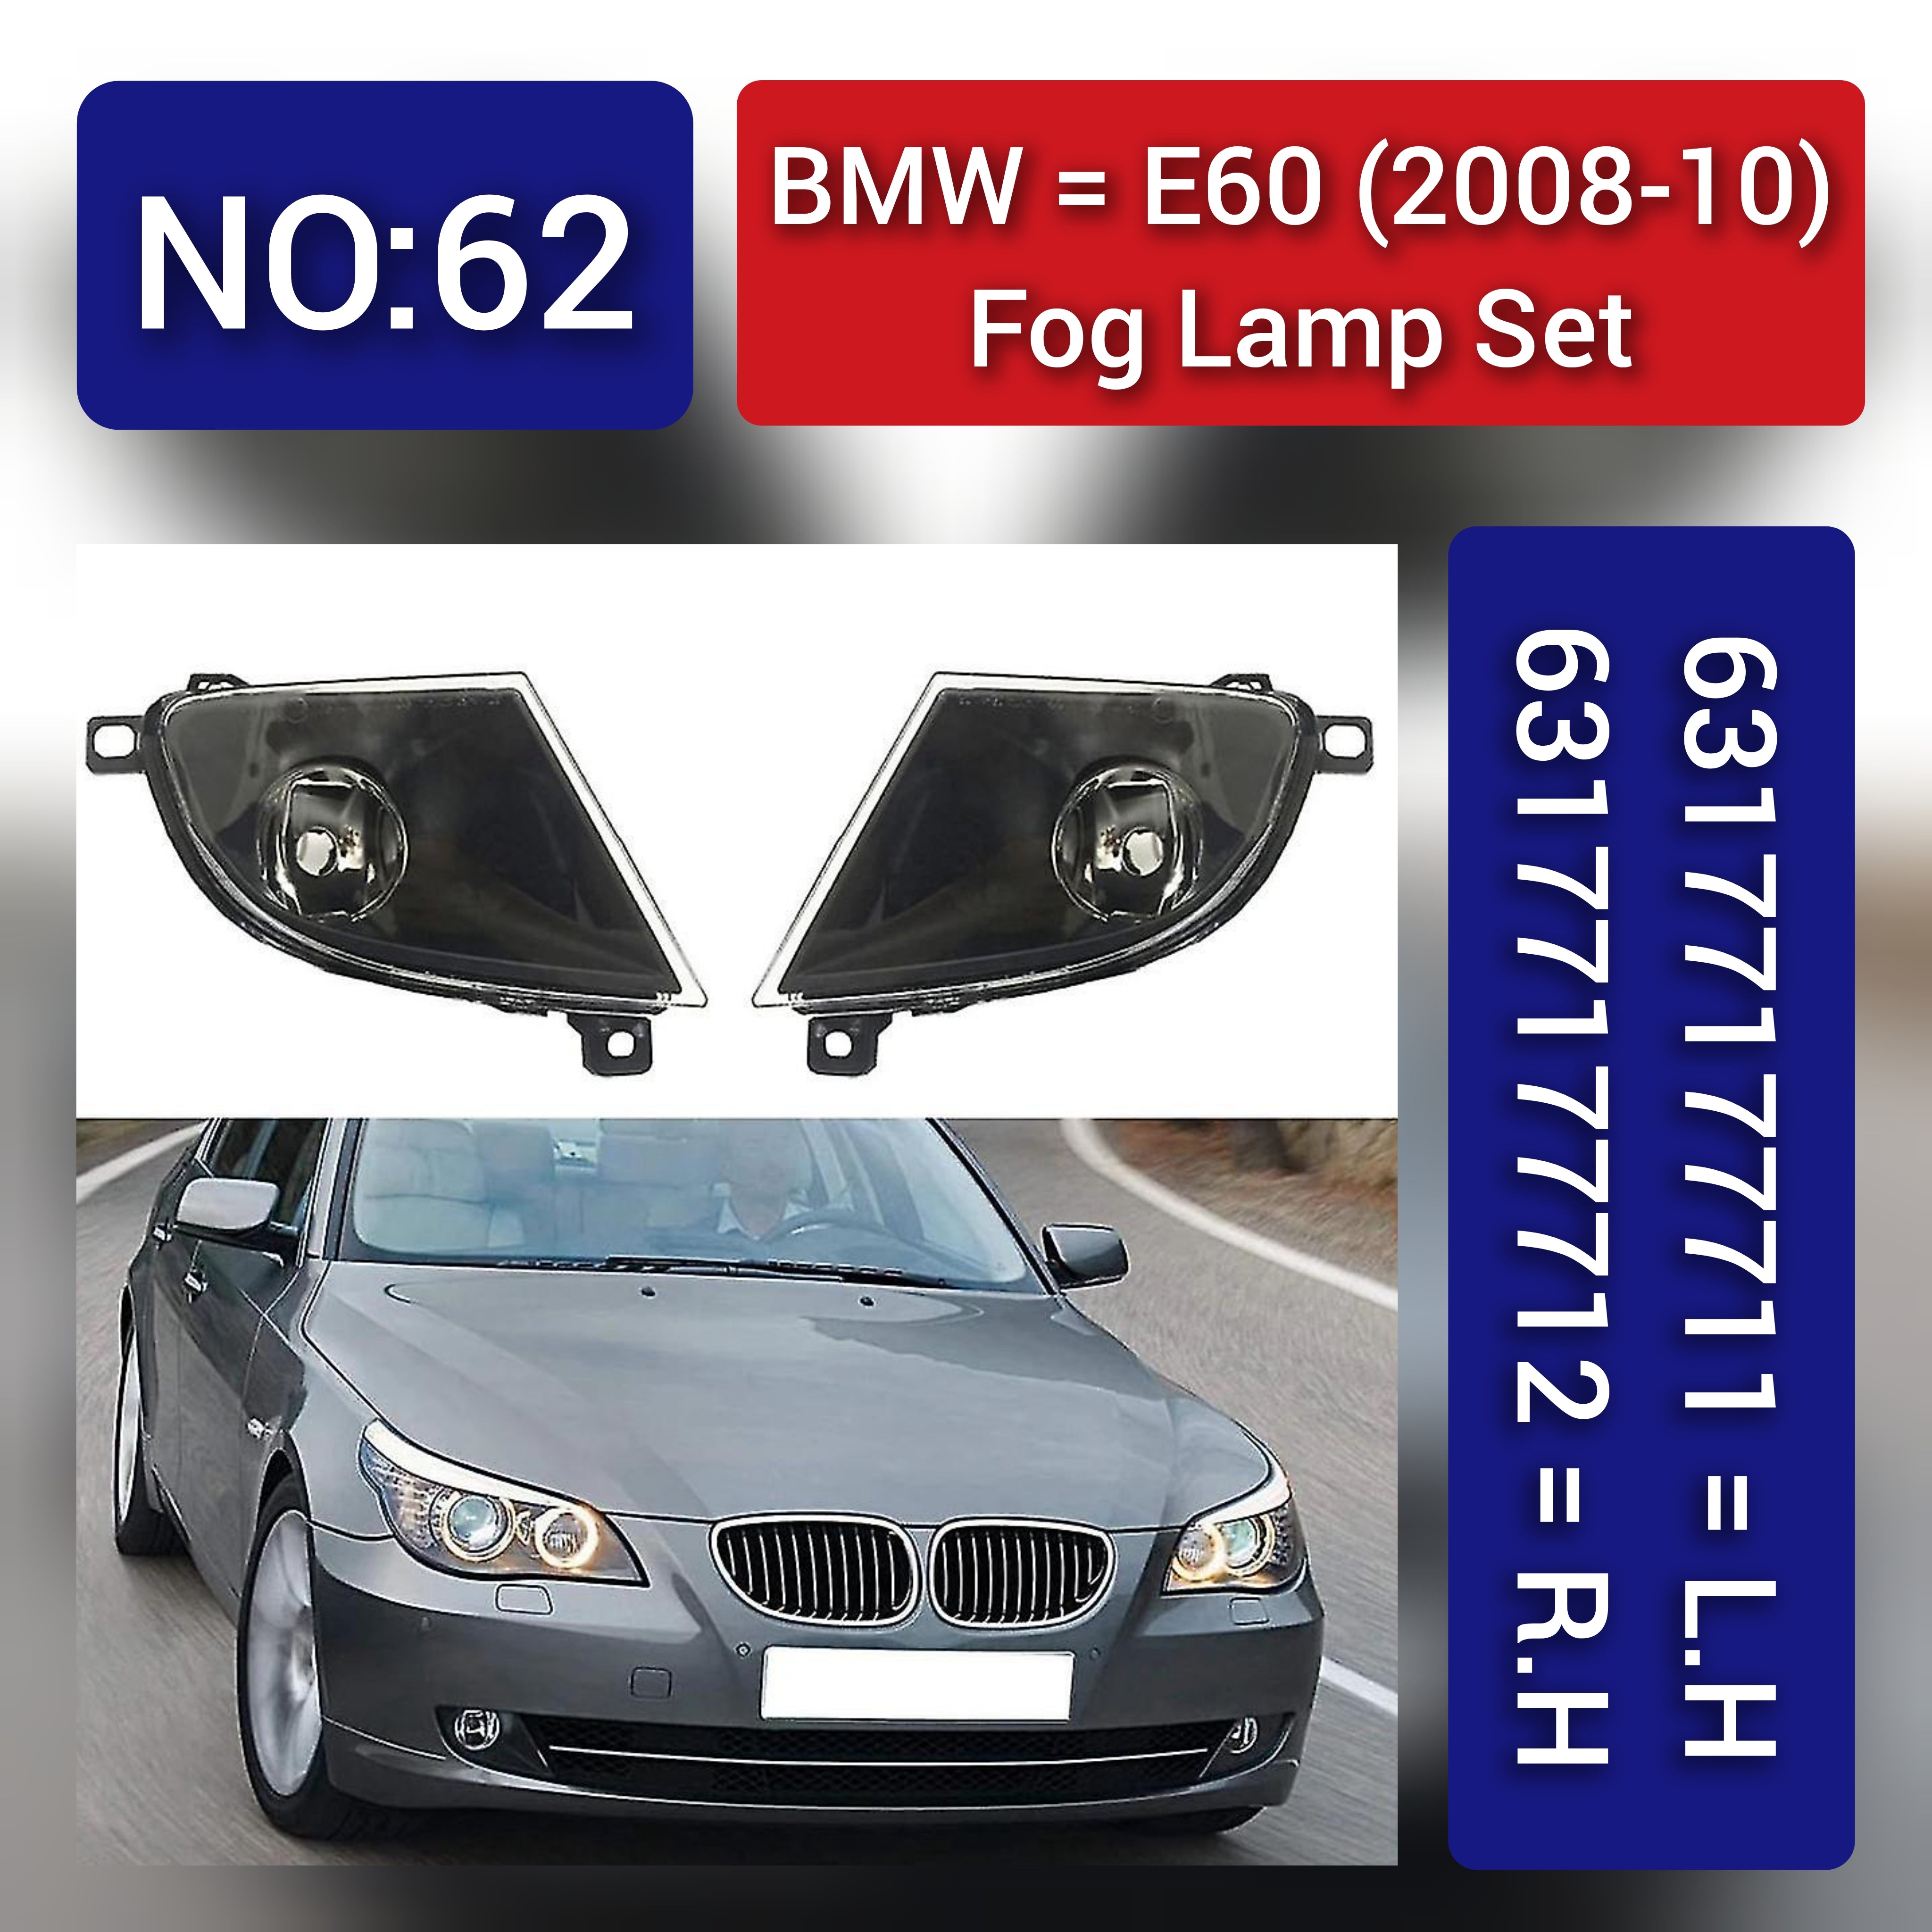 Fog Lamp Fog Light Compatible With BMW 5 Series E60 2008-2010 Fog Lamp Fog Light Left 63177177711 & Right 63177177712 Tag-FO-62